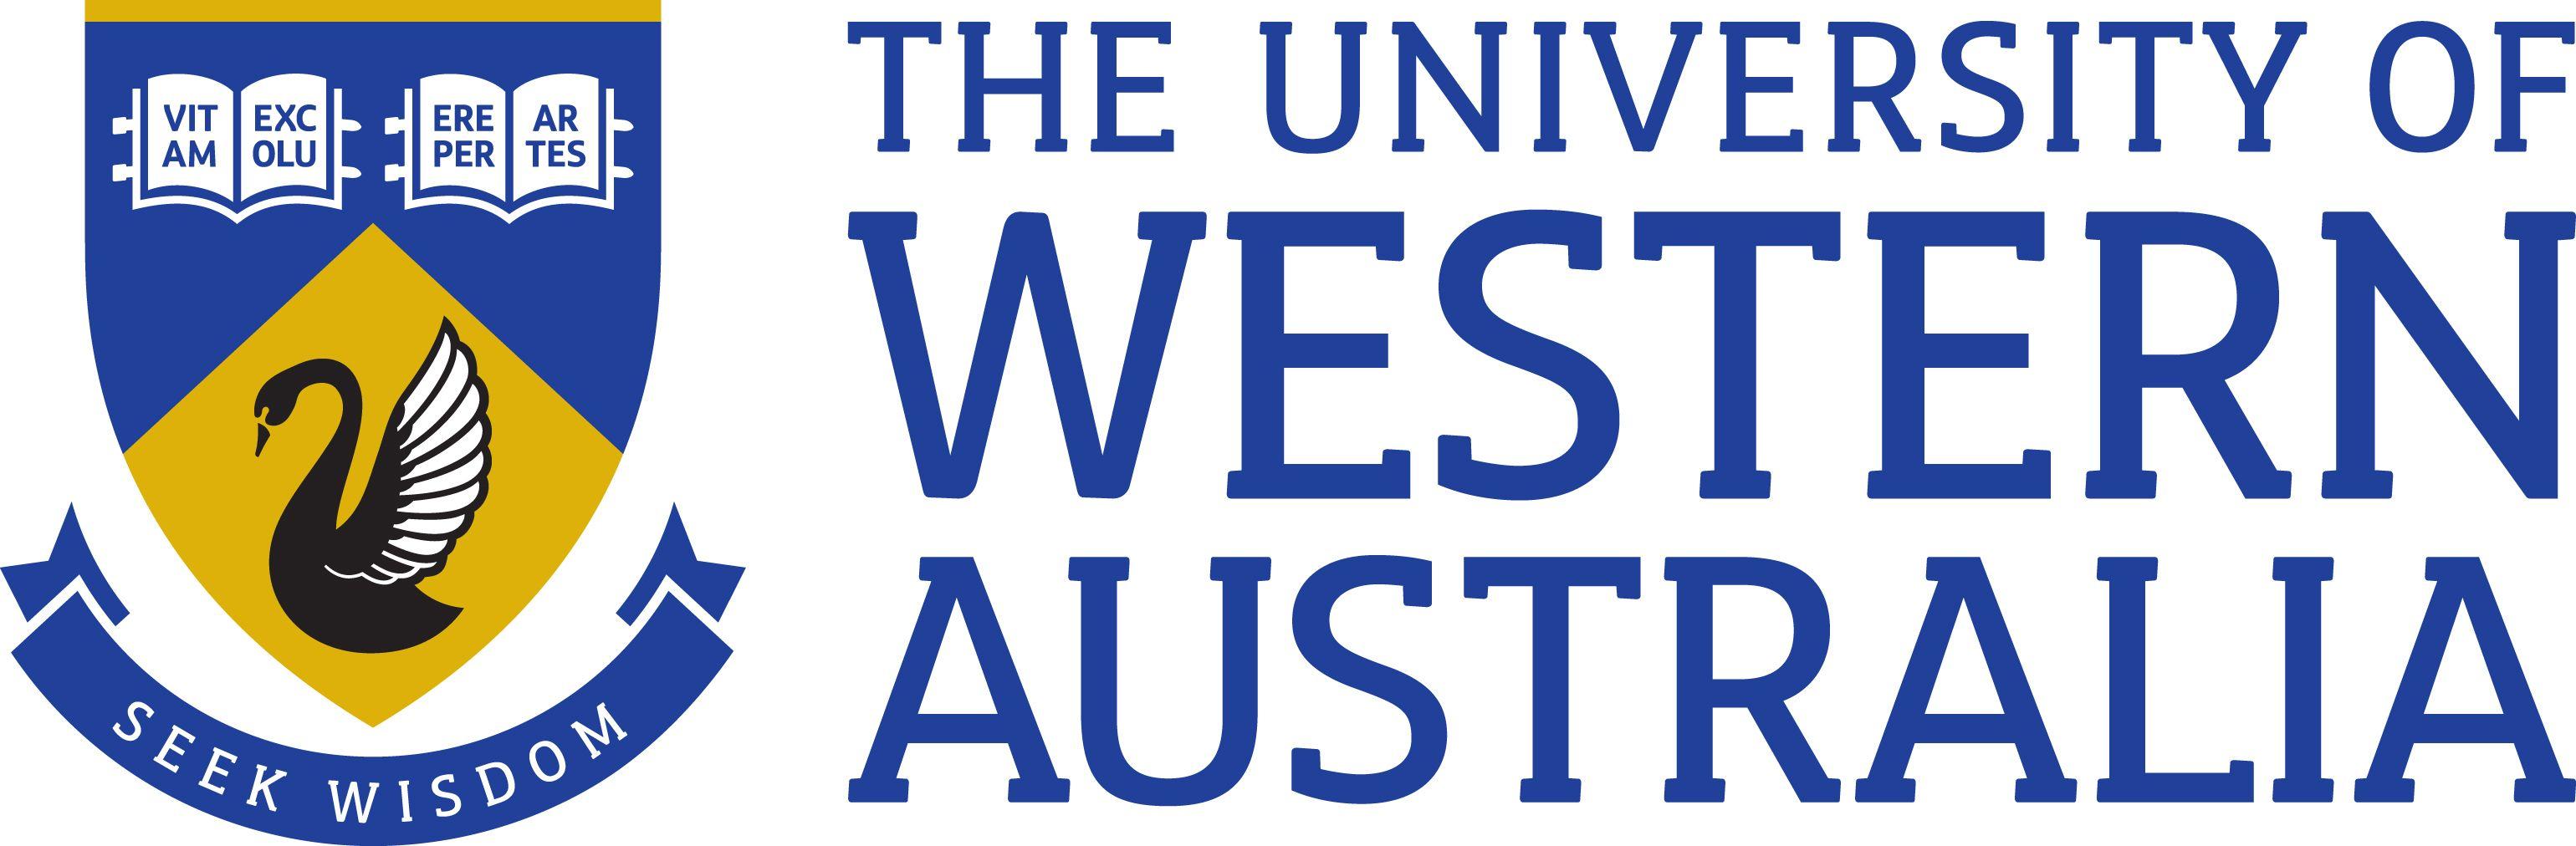 University of WA Logo - The University of Western Australia